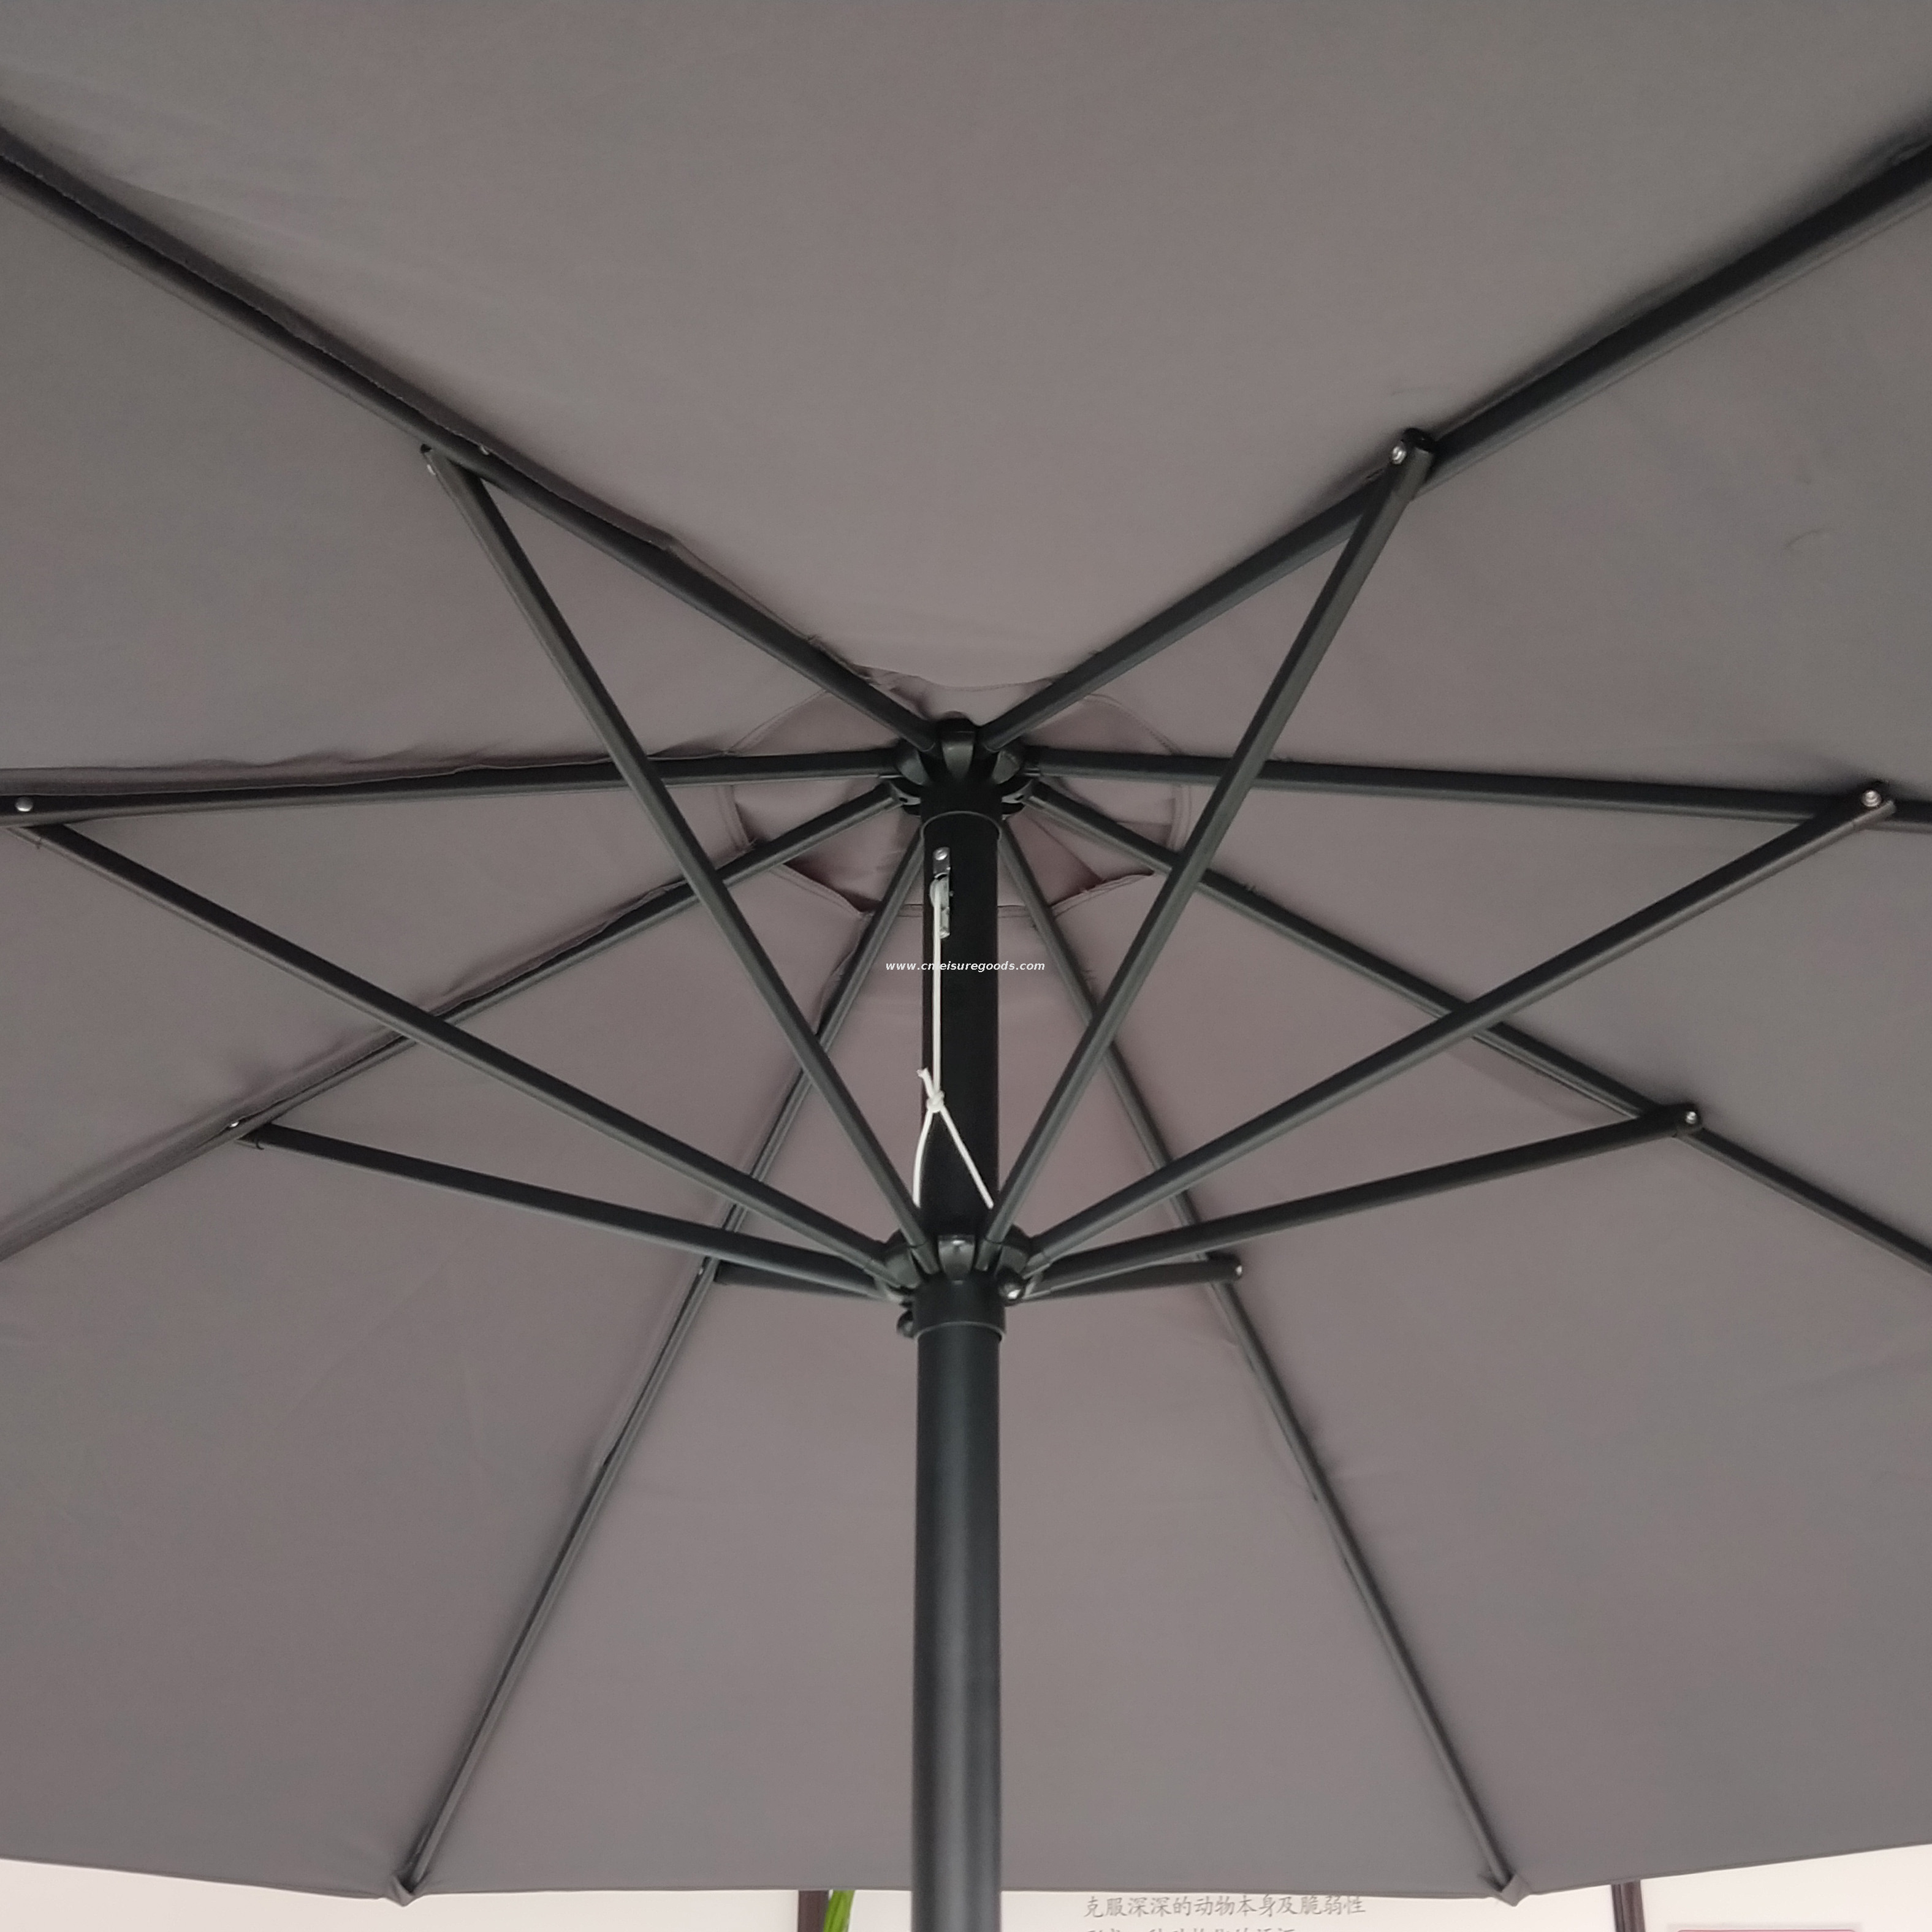 Uplion Garden Furniture Trend Popular Durable Garden Umbrella Outdoor Parasol